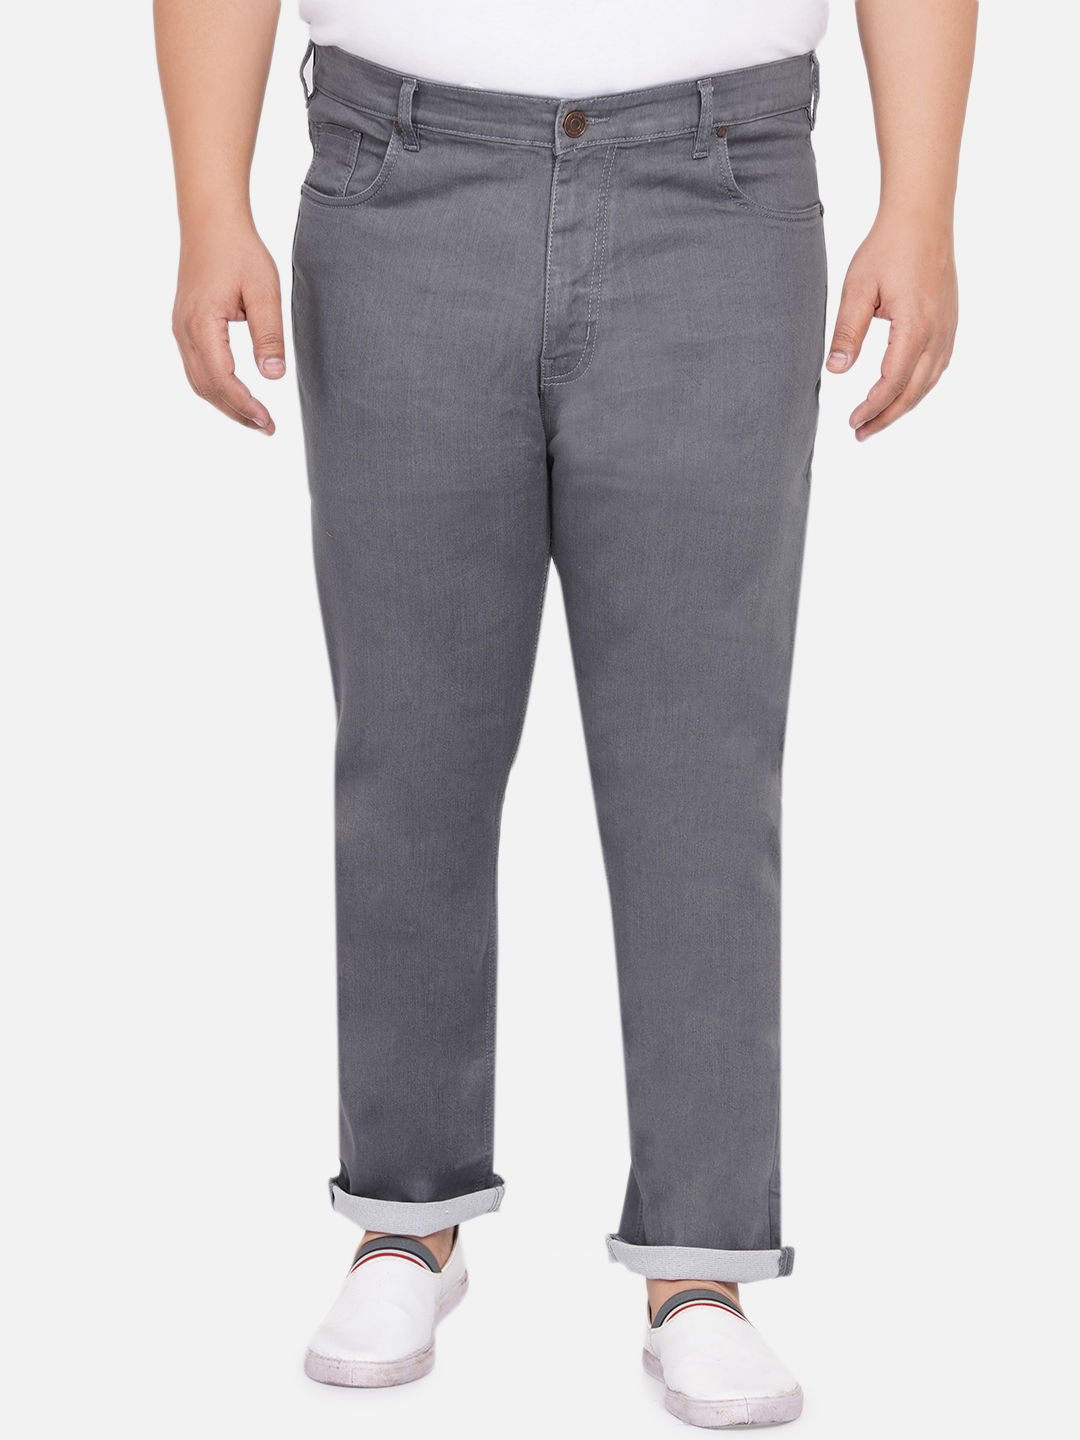 John Pride Grey Jeans